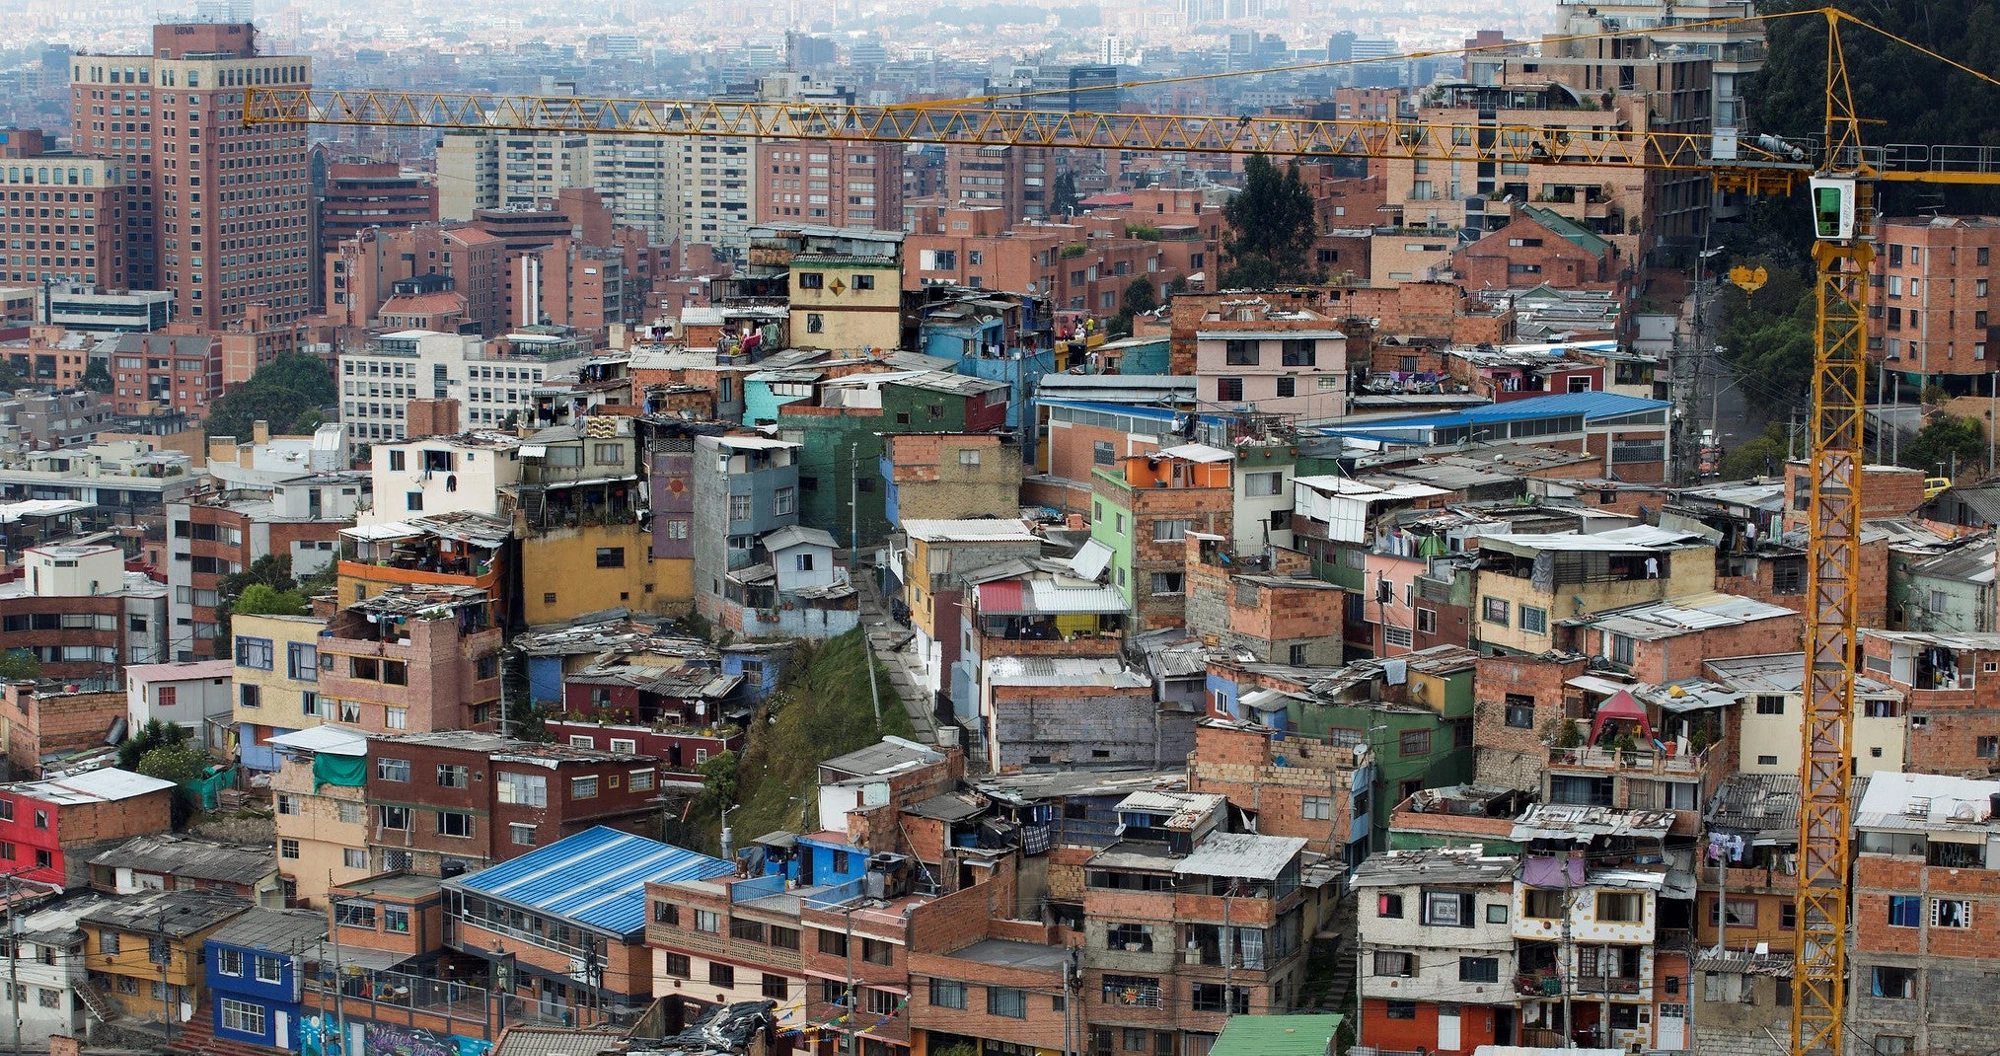 City view of Bogotá